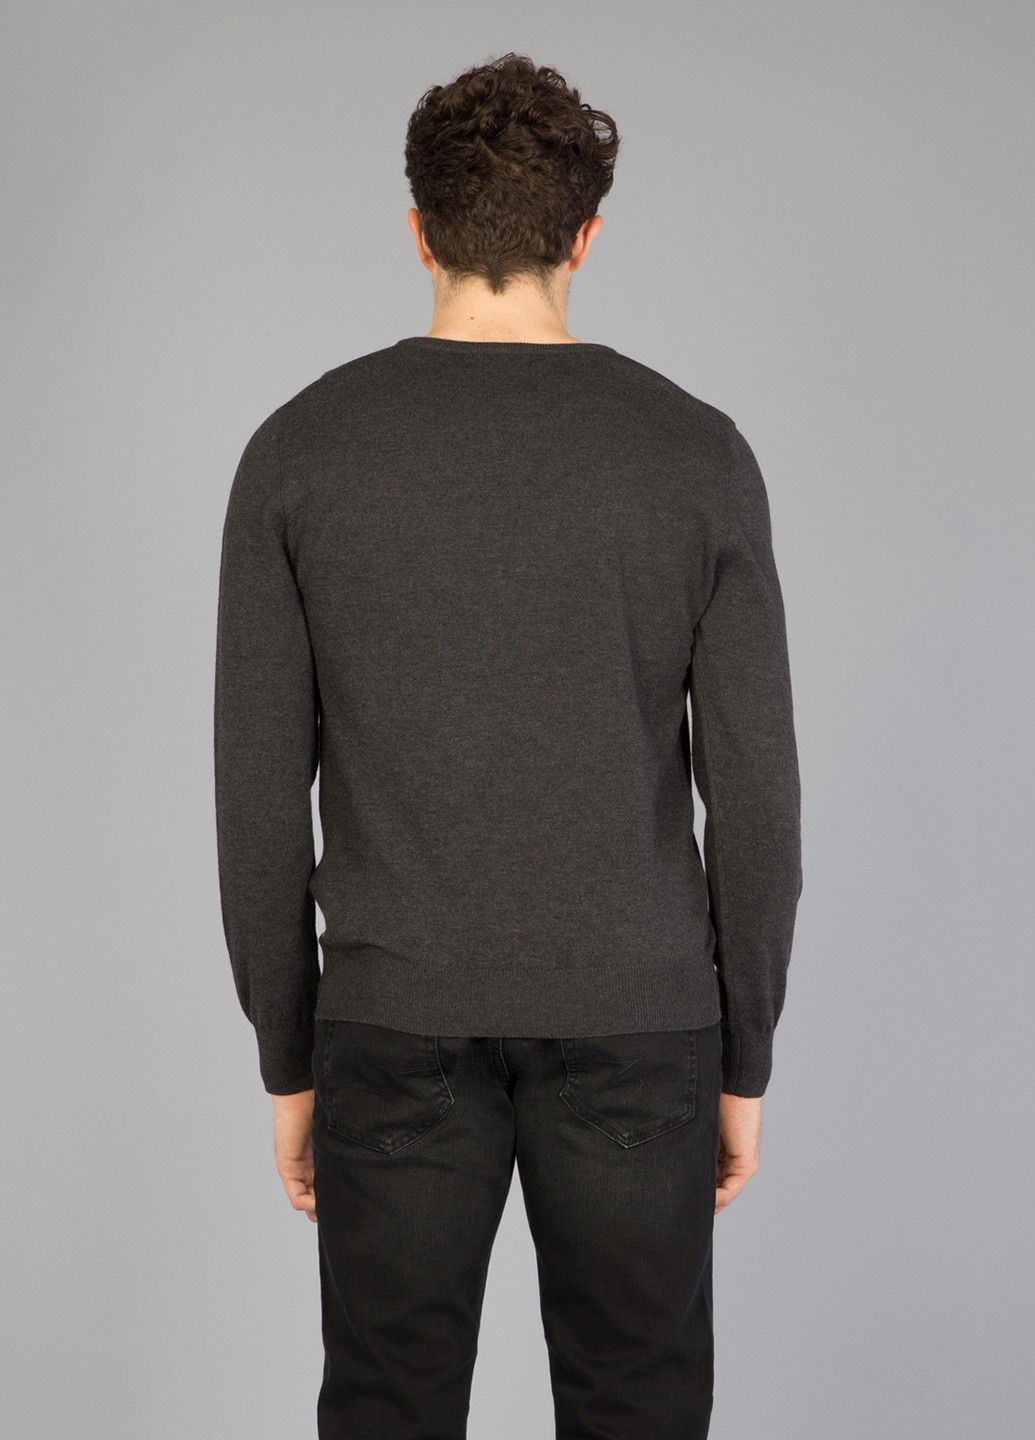 Серый демисезонный пуловер пуловер Colin's